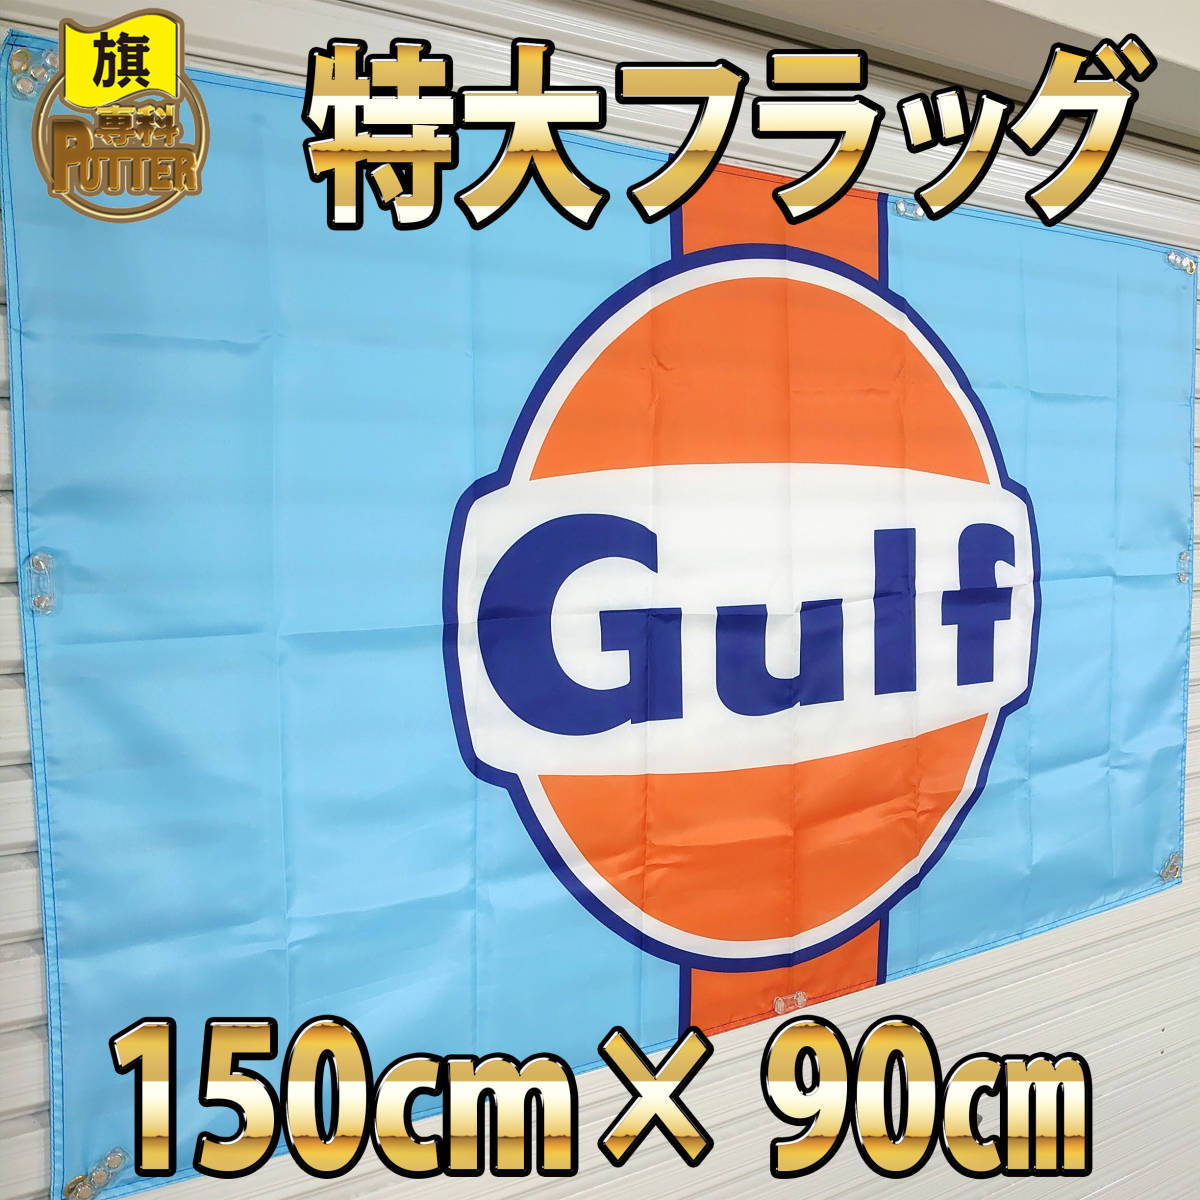 Gulf フラッグ 特大サイズ P87 150cm×90cm ガルフバナー 旗